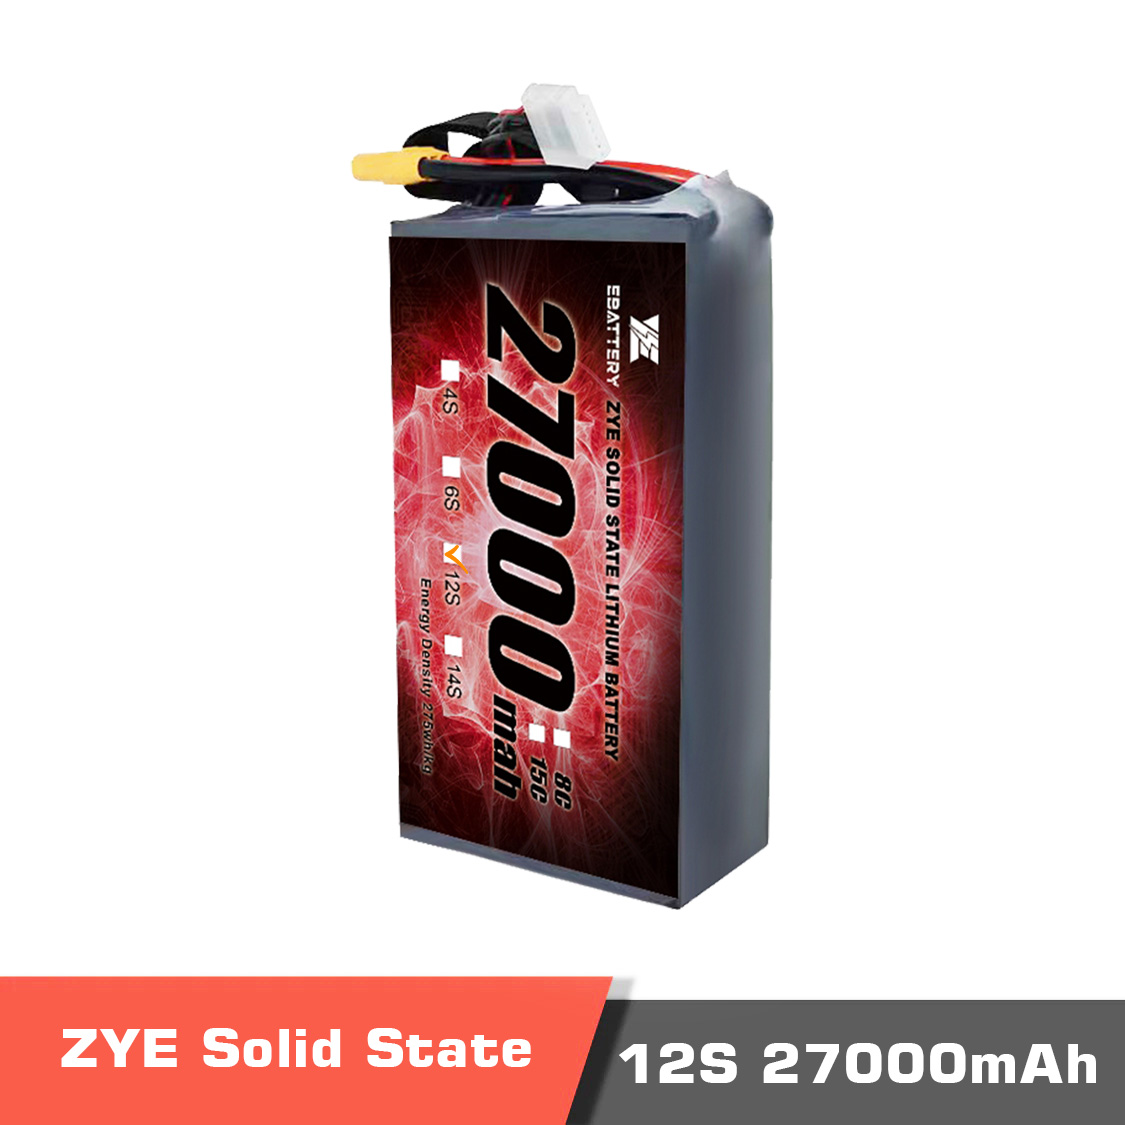 ZYE 27000 12s temp.1 - ZYE Power Ultra HV Semi Solid-State Battery, Ultra HV Semi Solid-State Battery, 6S 27000mAh high voltage LiPo Battery, 6S 27000mAh HV LiPo Battery, Solid-state LiPo battery, lipo battery, drone battery, 6s battery, high energy density battery, UAV, drone, vtol, ZYE Power, ZYE power Battery - MotioNew - 2